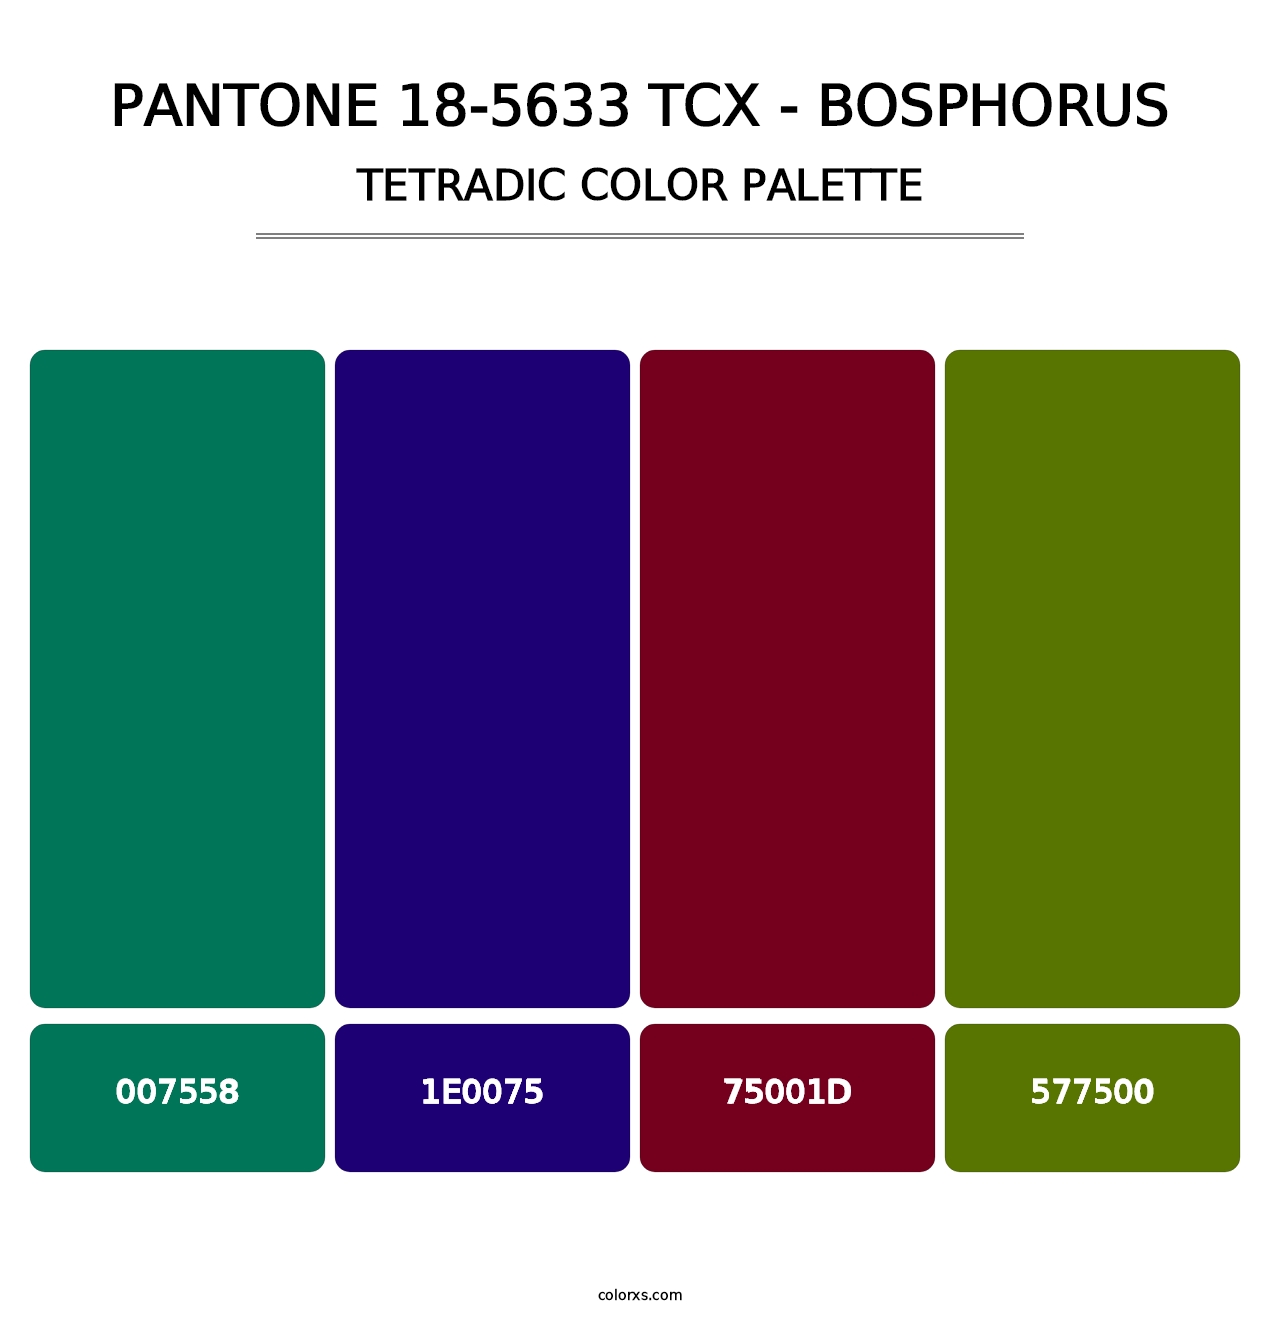 PANTONE 18-5633 TCX - Bosphorus - Tetradic Color Palette